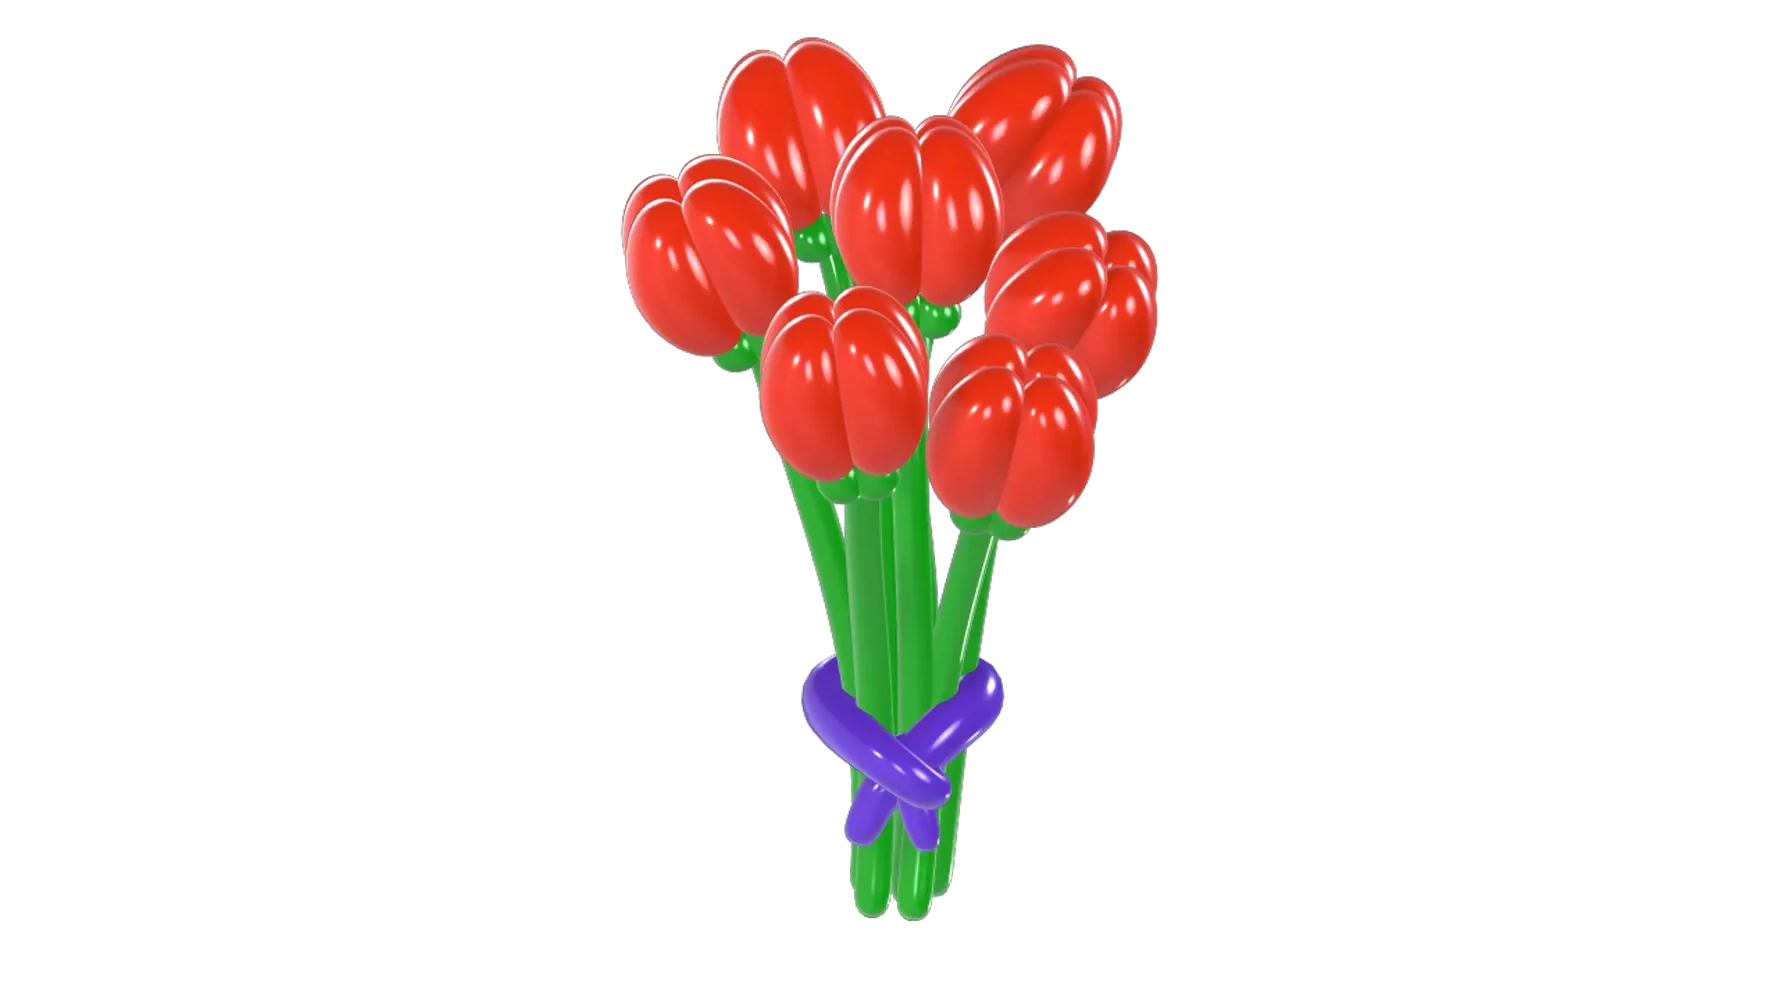 Tulips Balloon 3D Graphic